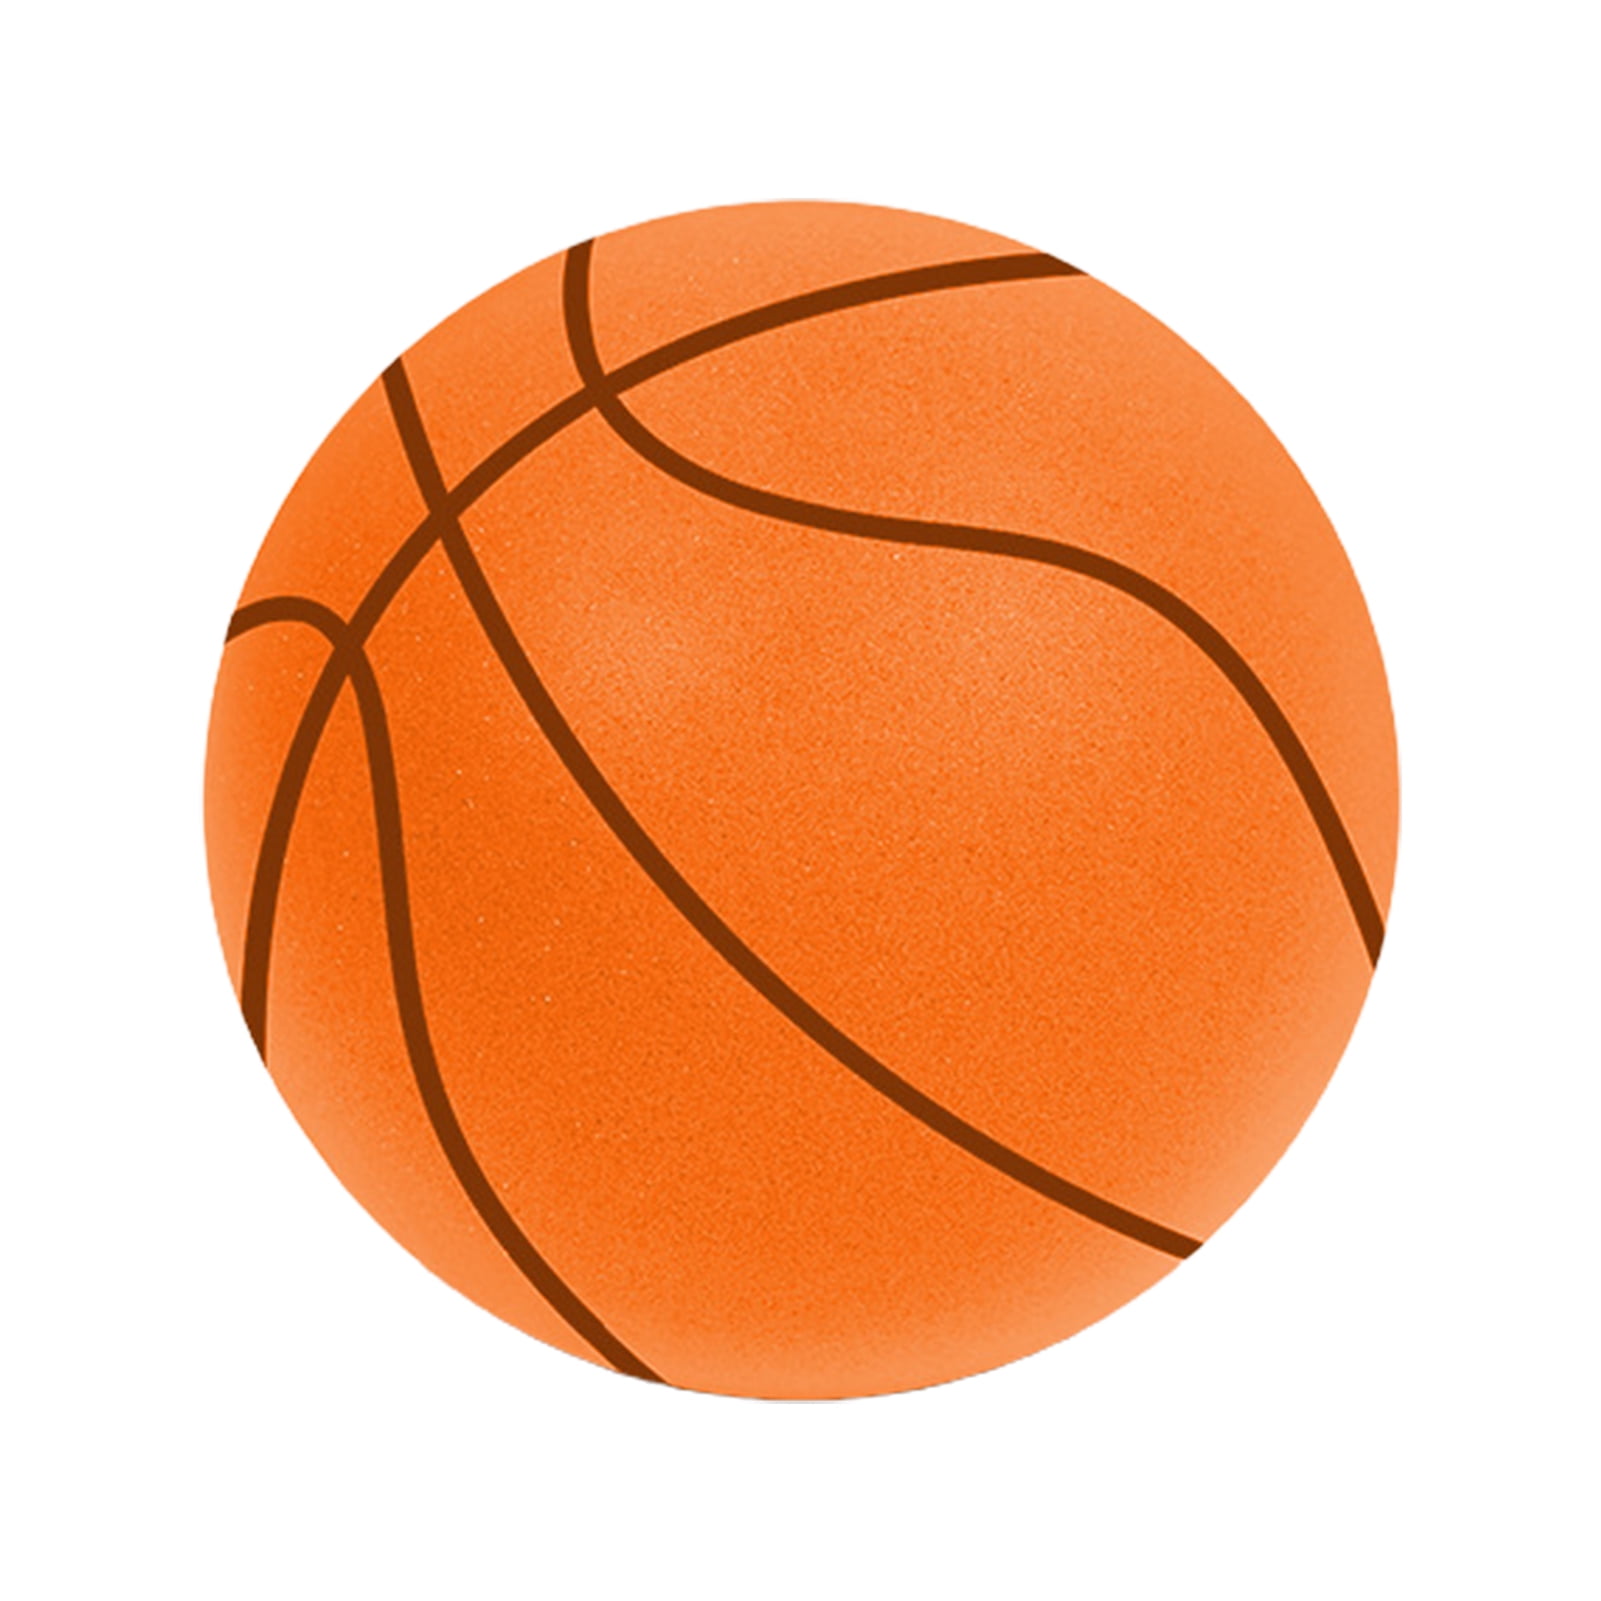 Eastshop Silent Basketball - Moderate Elasticity - Anti